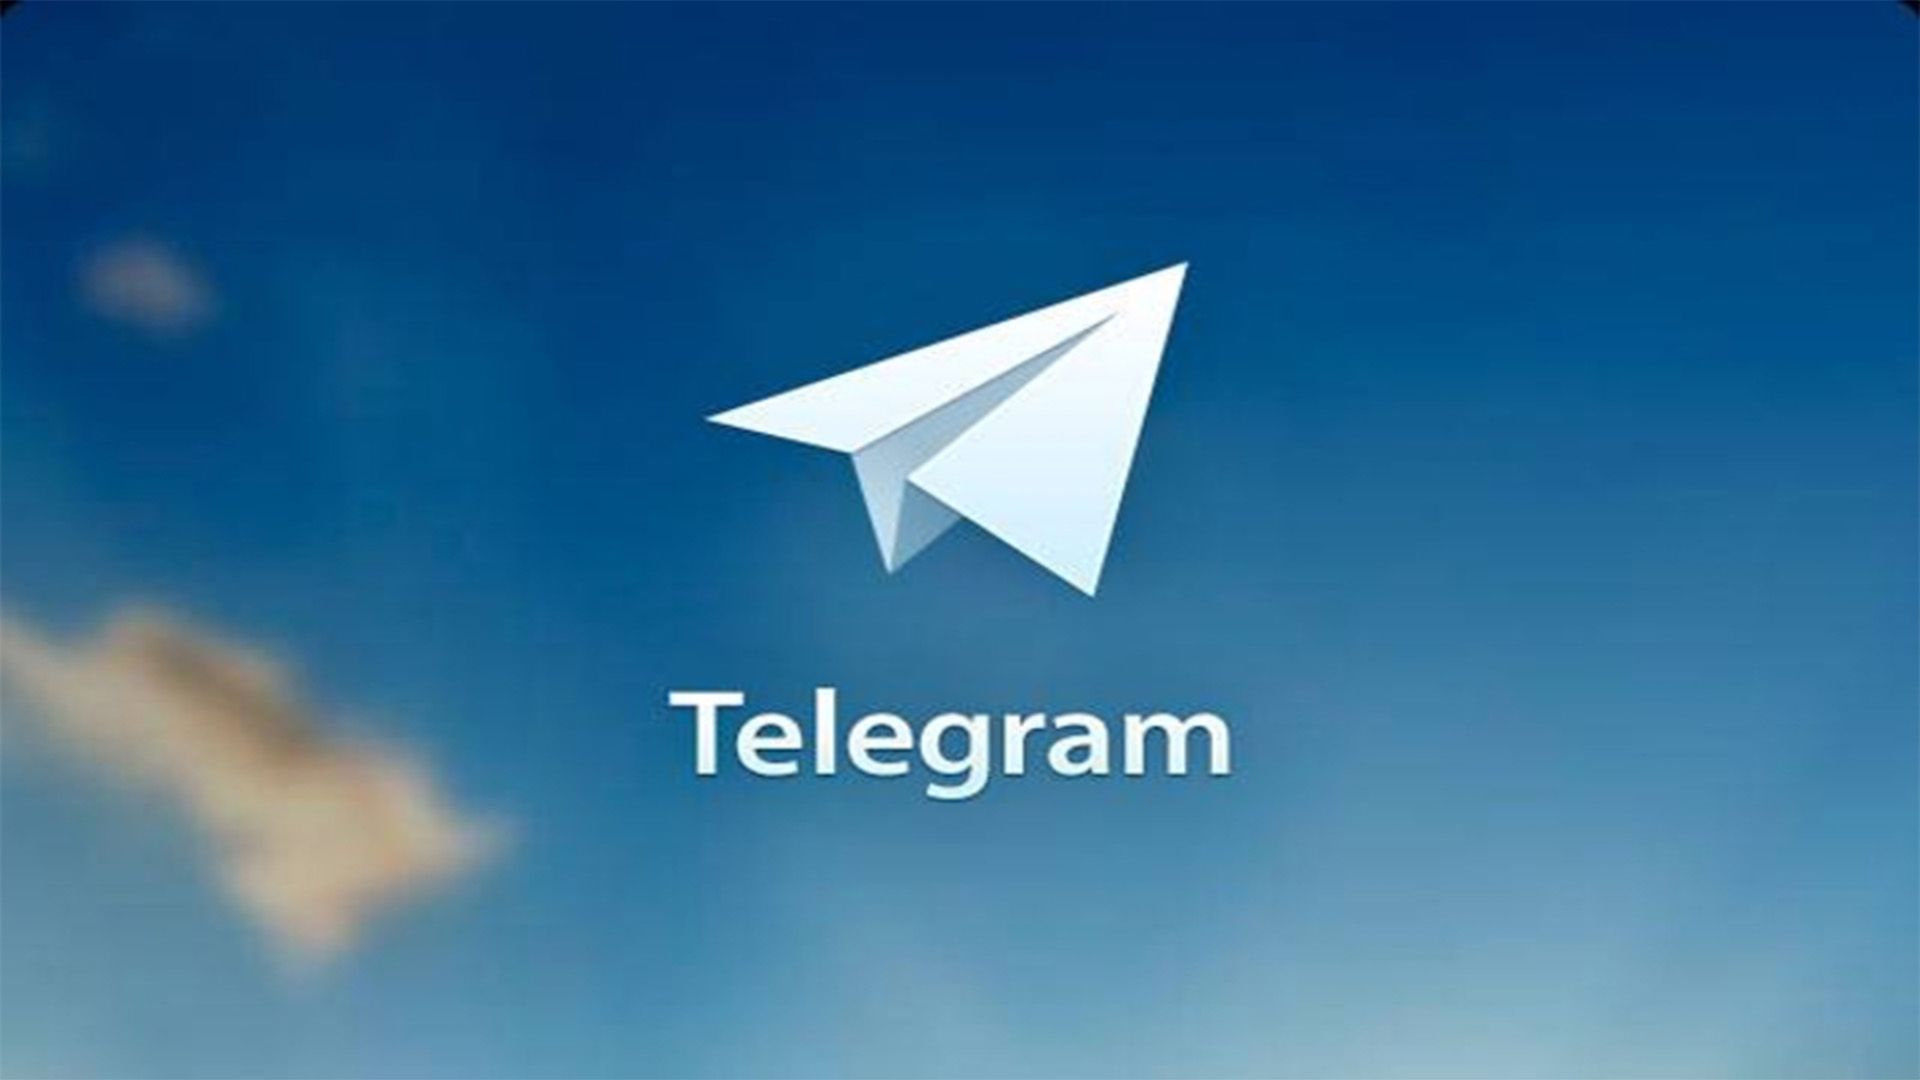 telegram app desktop